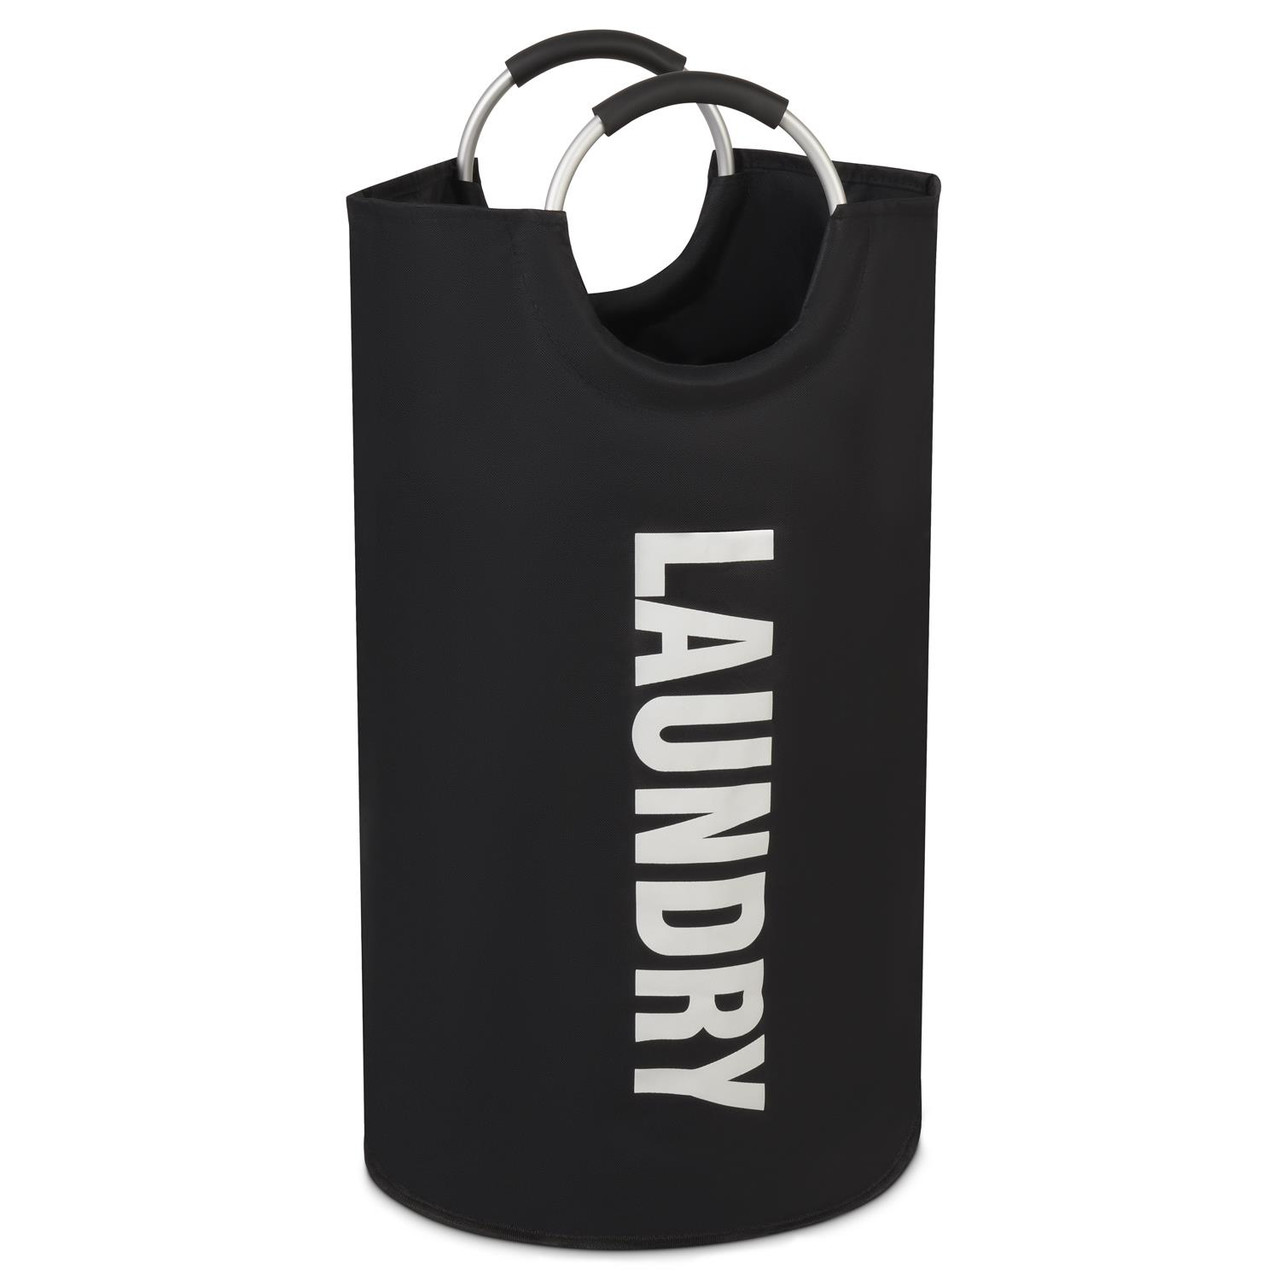 Vinsani® LARGE Collapsible Laundry Hamper Tote Bag Sorter - Strong Hard ...